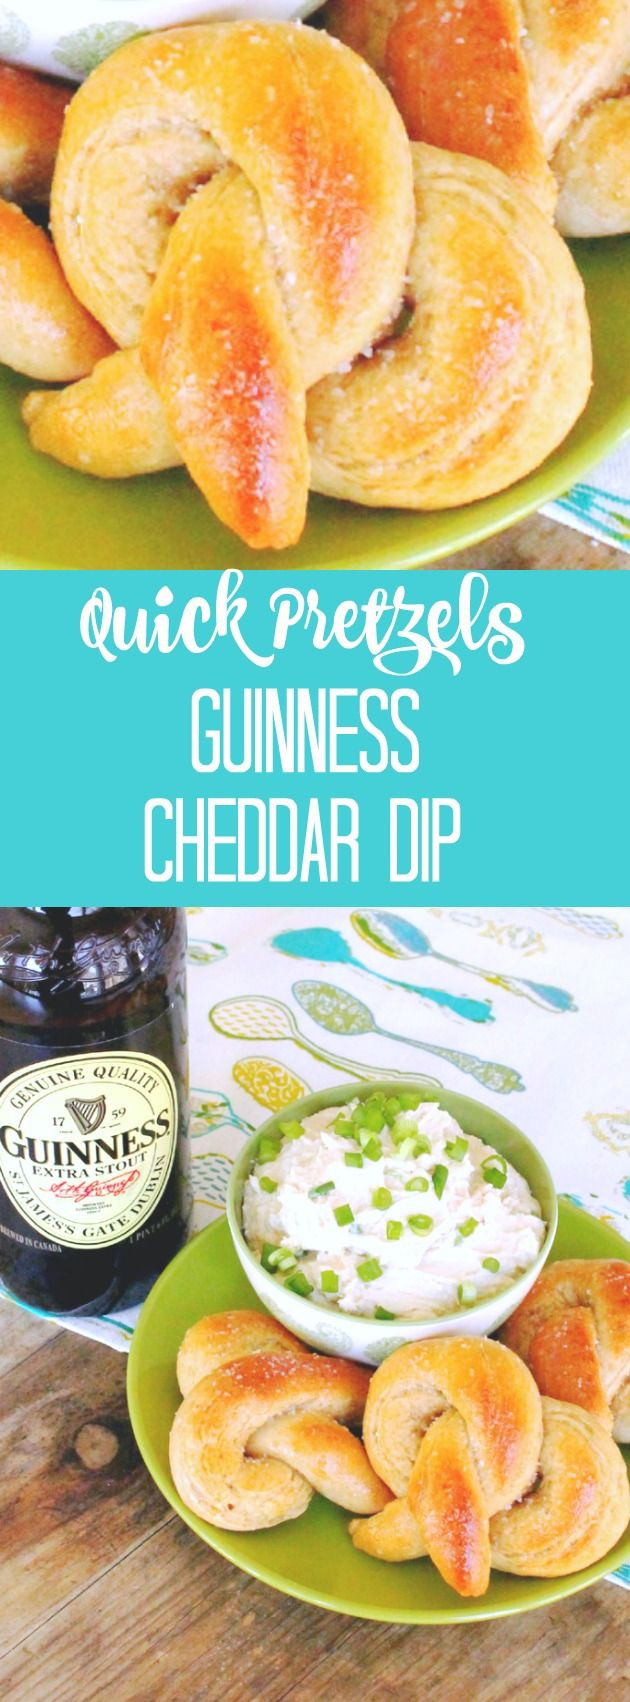 Irish Appetizer Recipes
 Best 25 Irish appetizers ideas on Pinterest